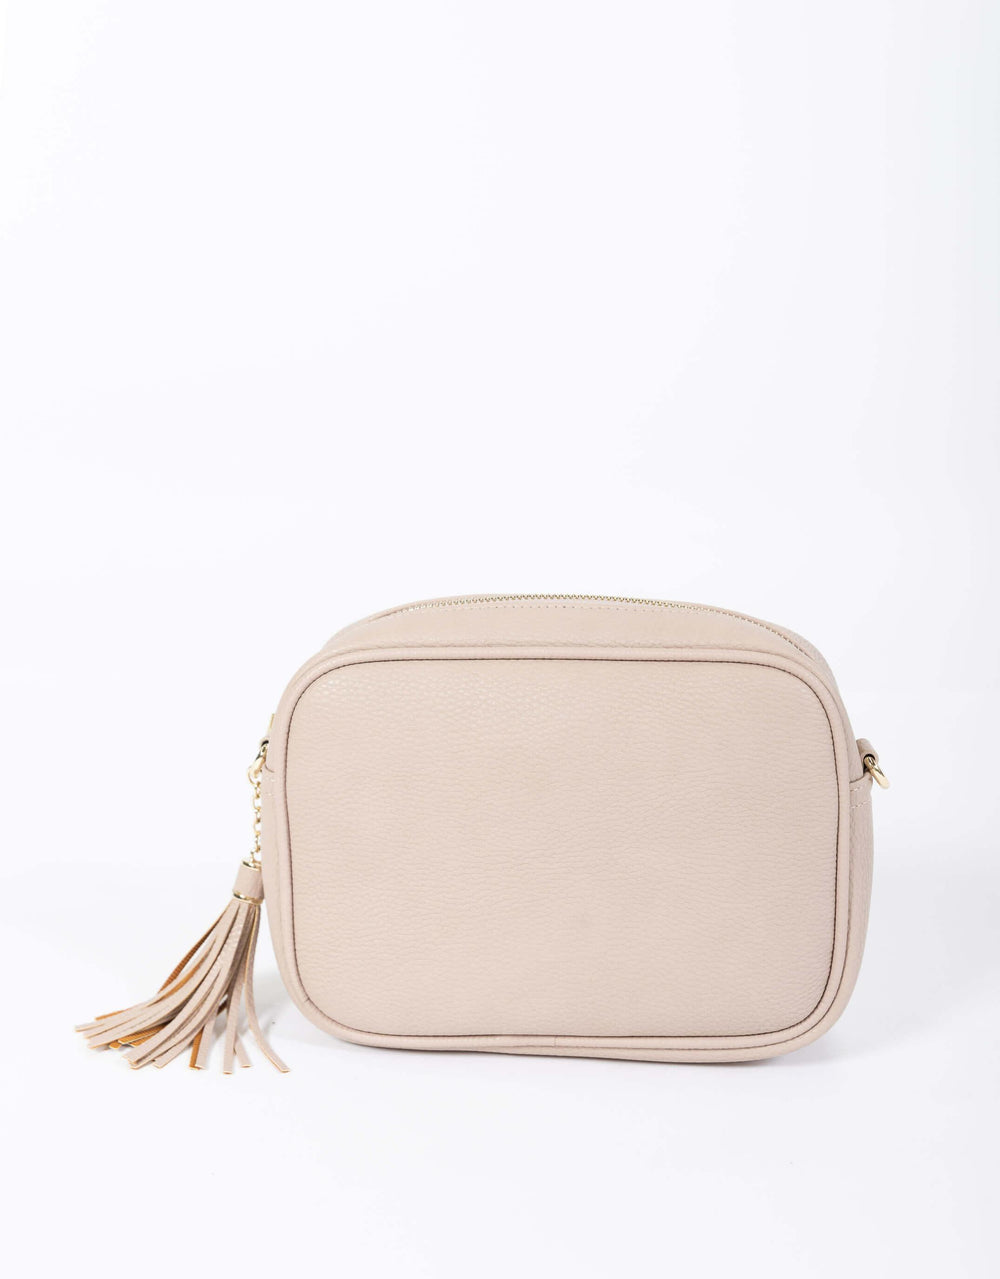 White & Co. - Zoe Crossbody Bag - Pink/Blue Stripe - White & Co Living Accessories